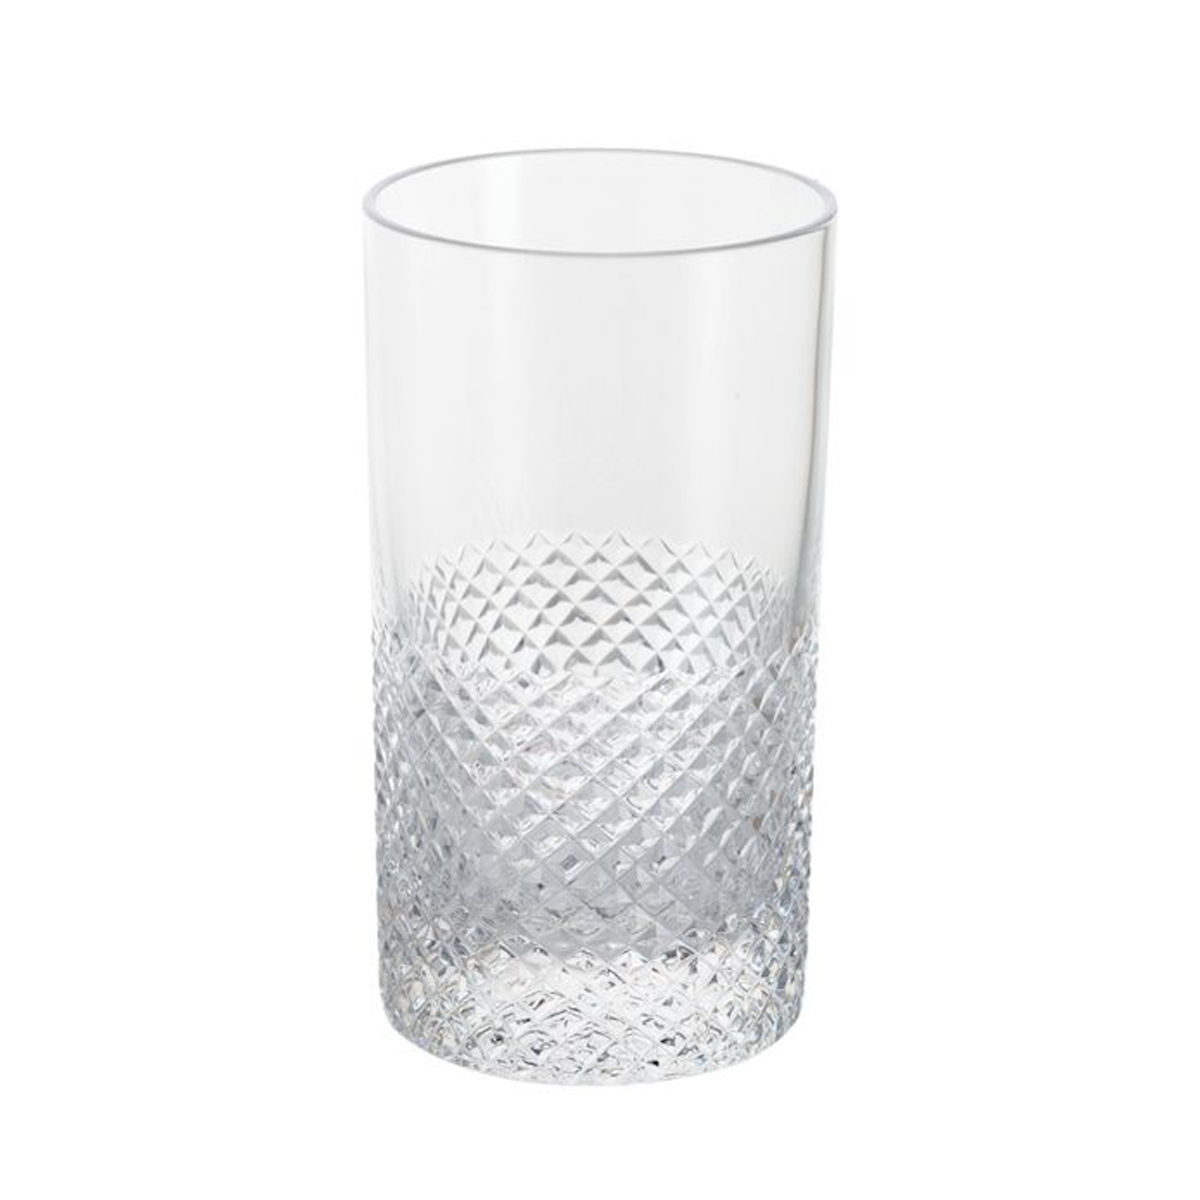 Royal Brierley Antibes Crystal Large Tumbler Glass